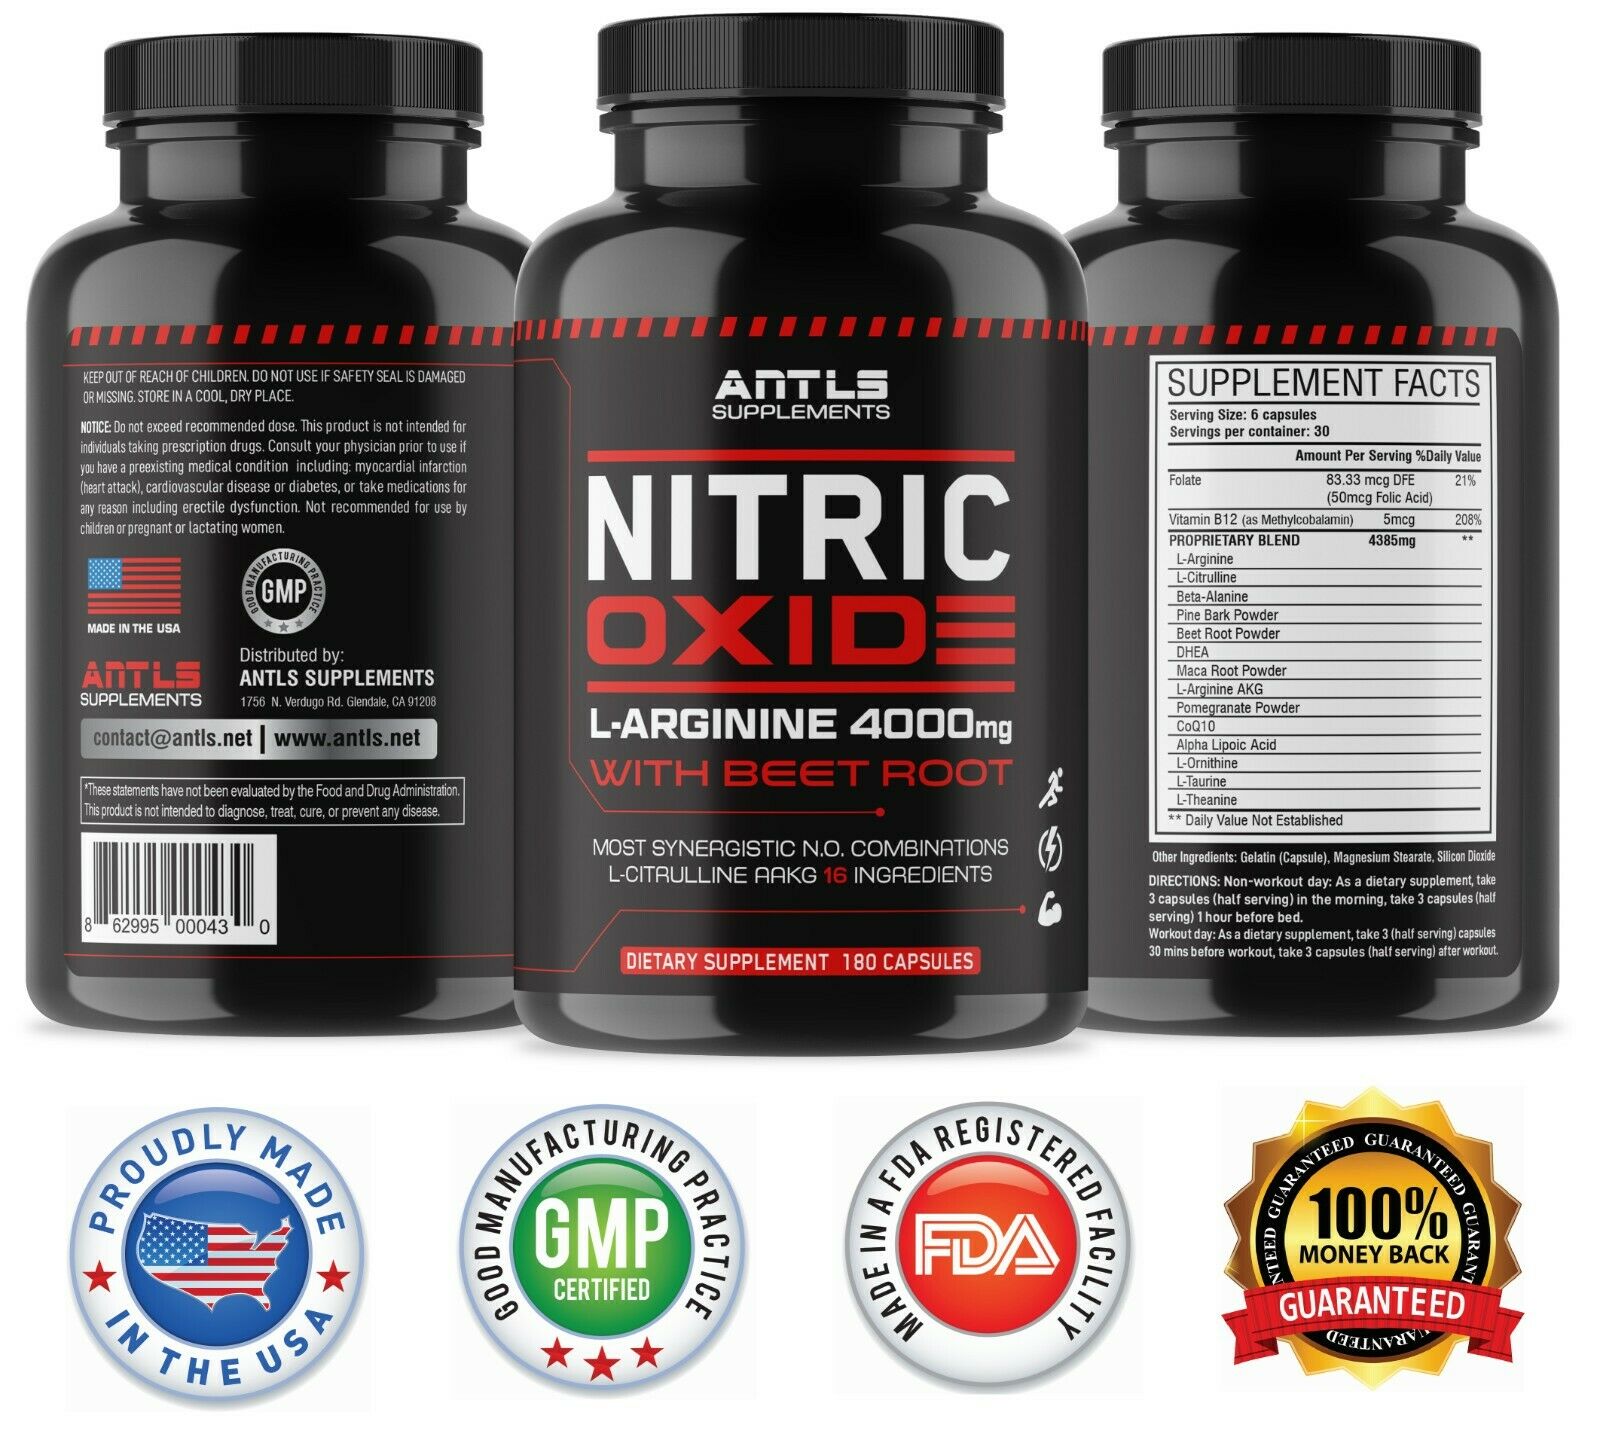 Nitric Oxide Male Enhancement,Libido,Stamina,Pill,Performance